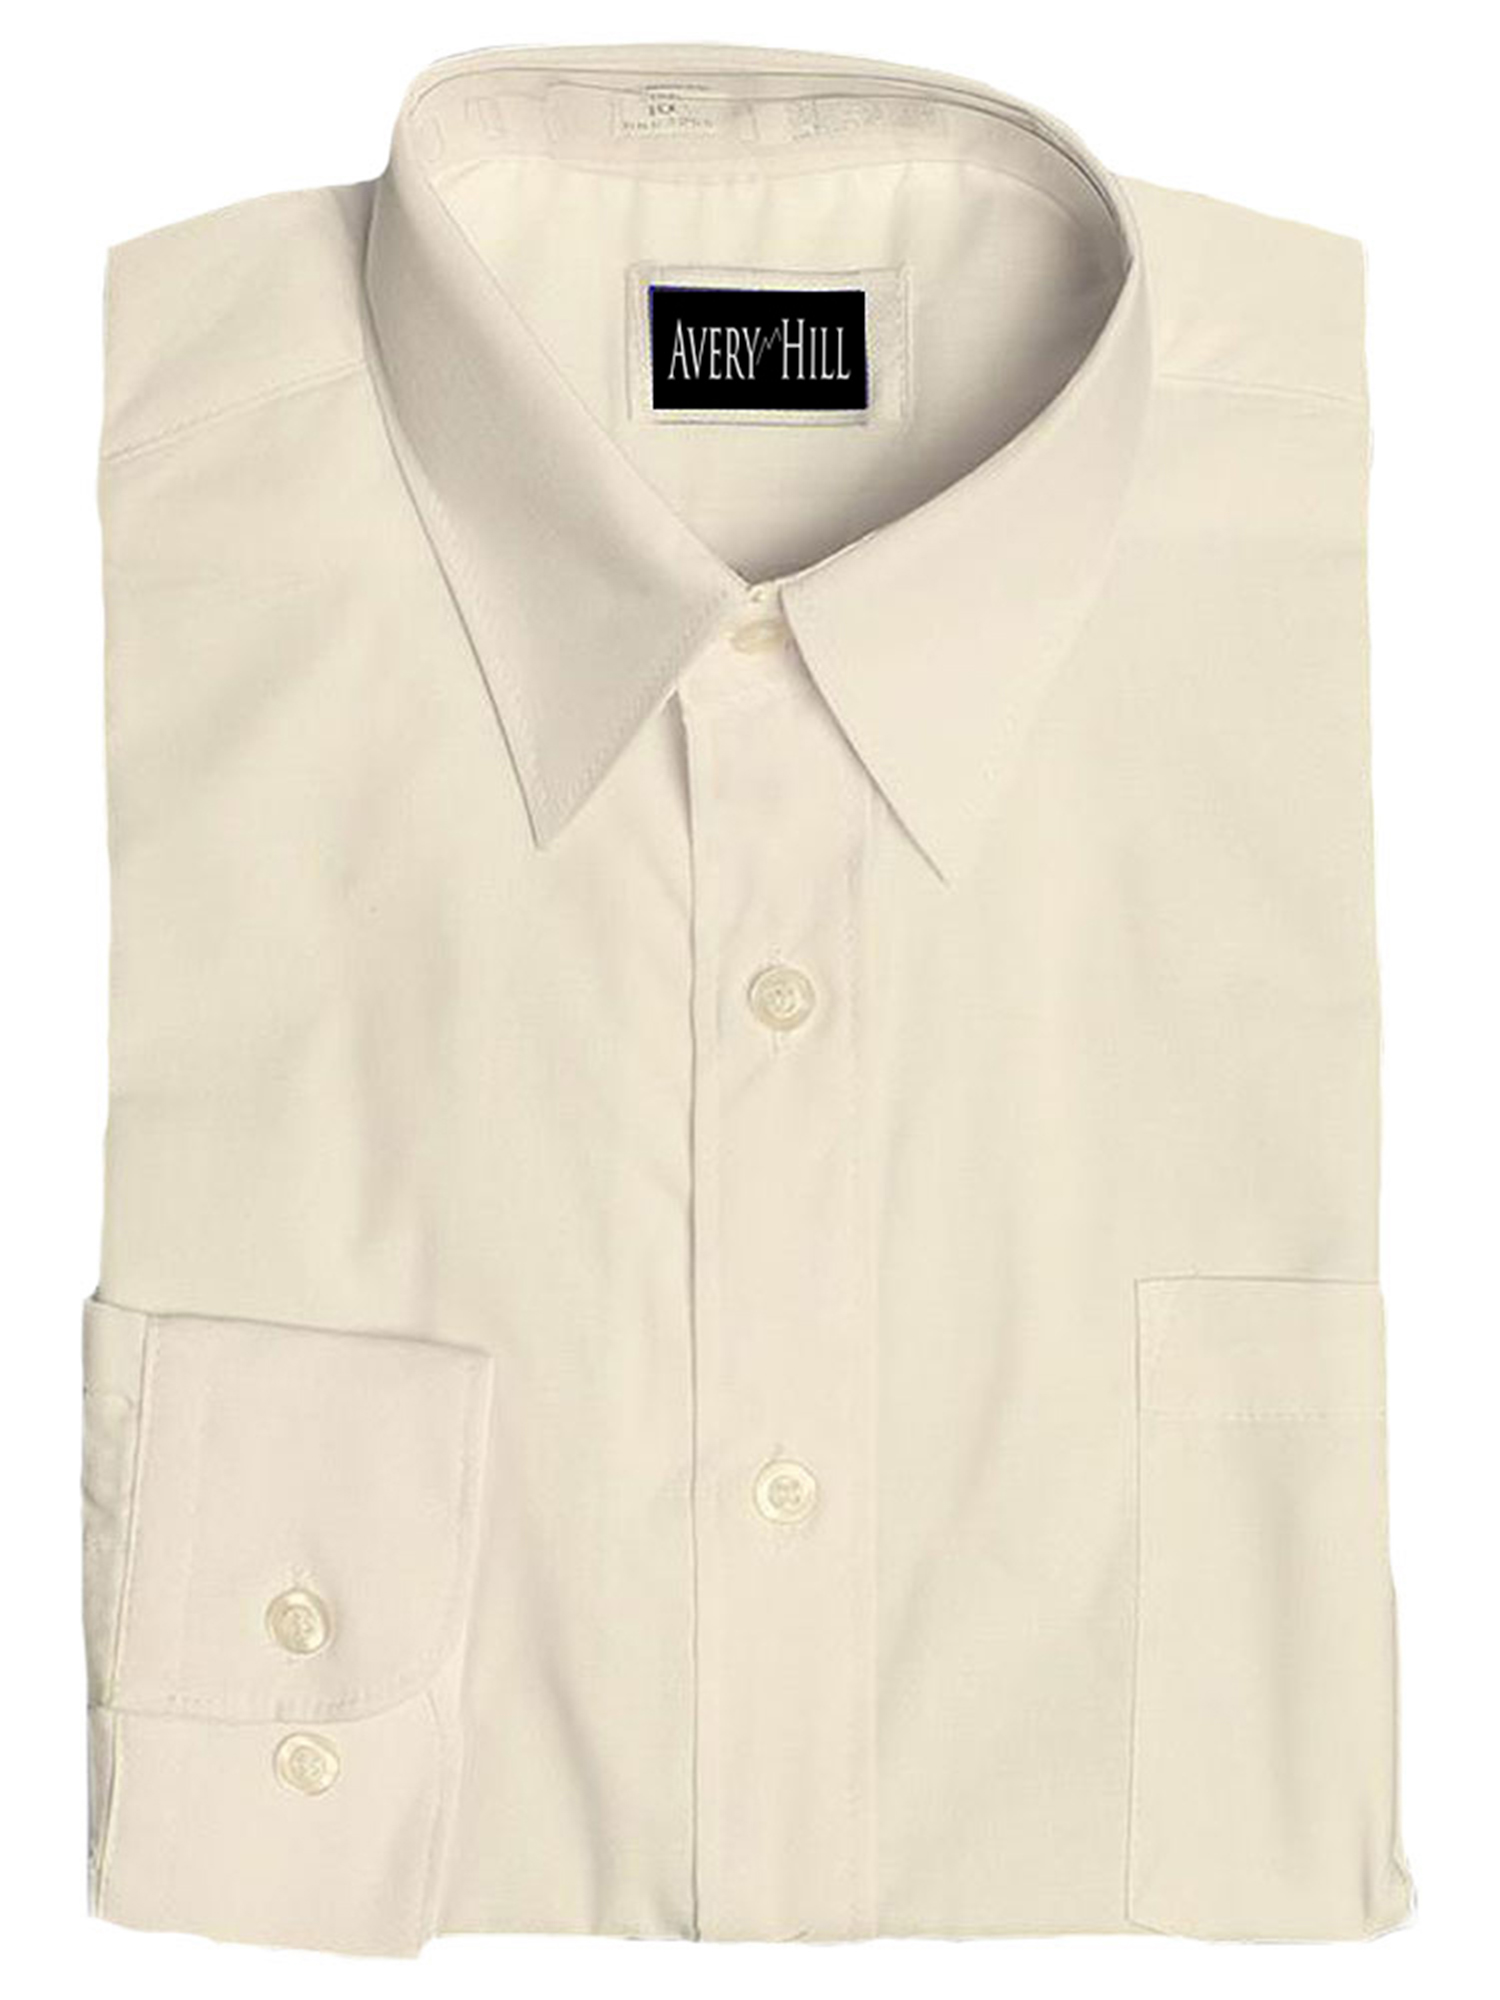 Boys White or Ivory Long Sleeve Wrinkle Resistant Dress Shirt IV 5